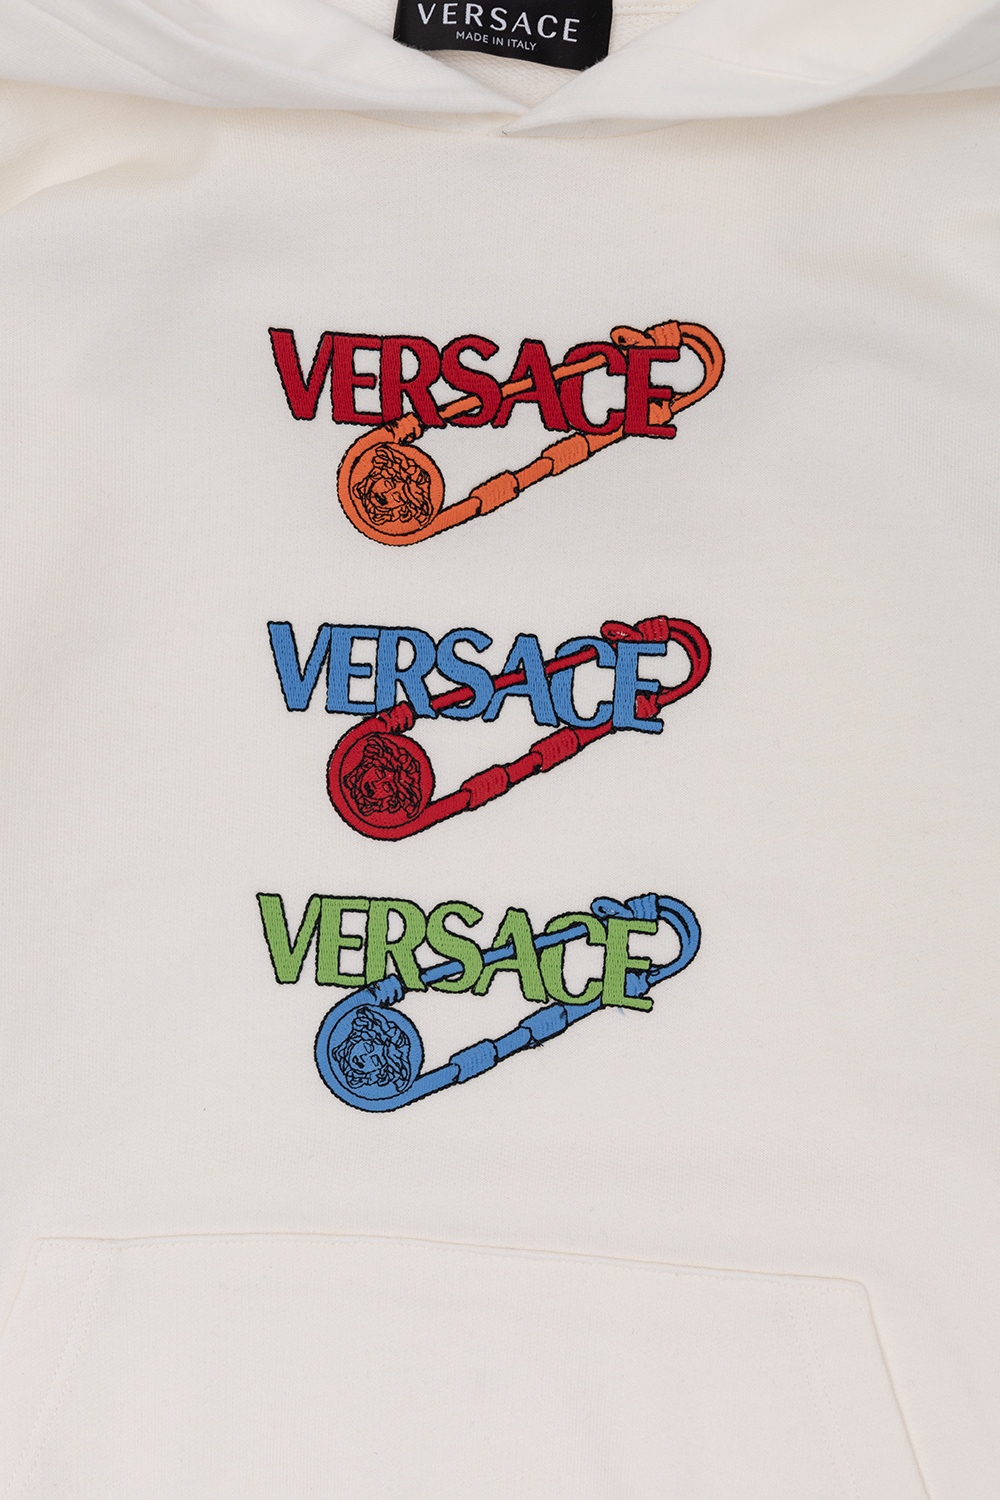 Versace Kids sweatshirt Greenhouse with logo